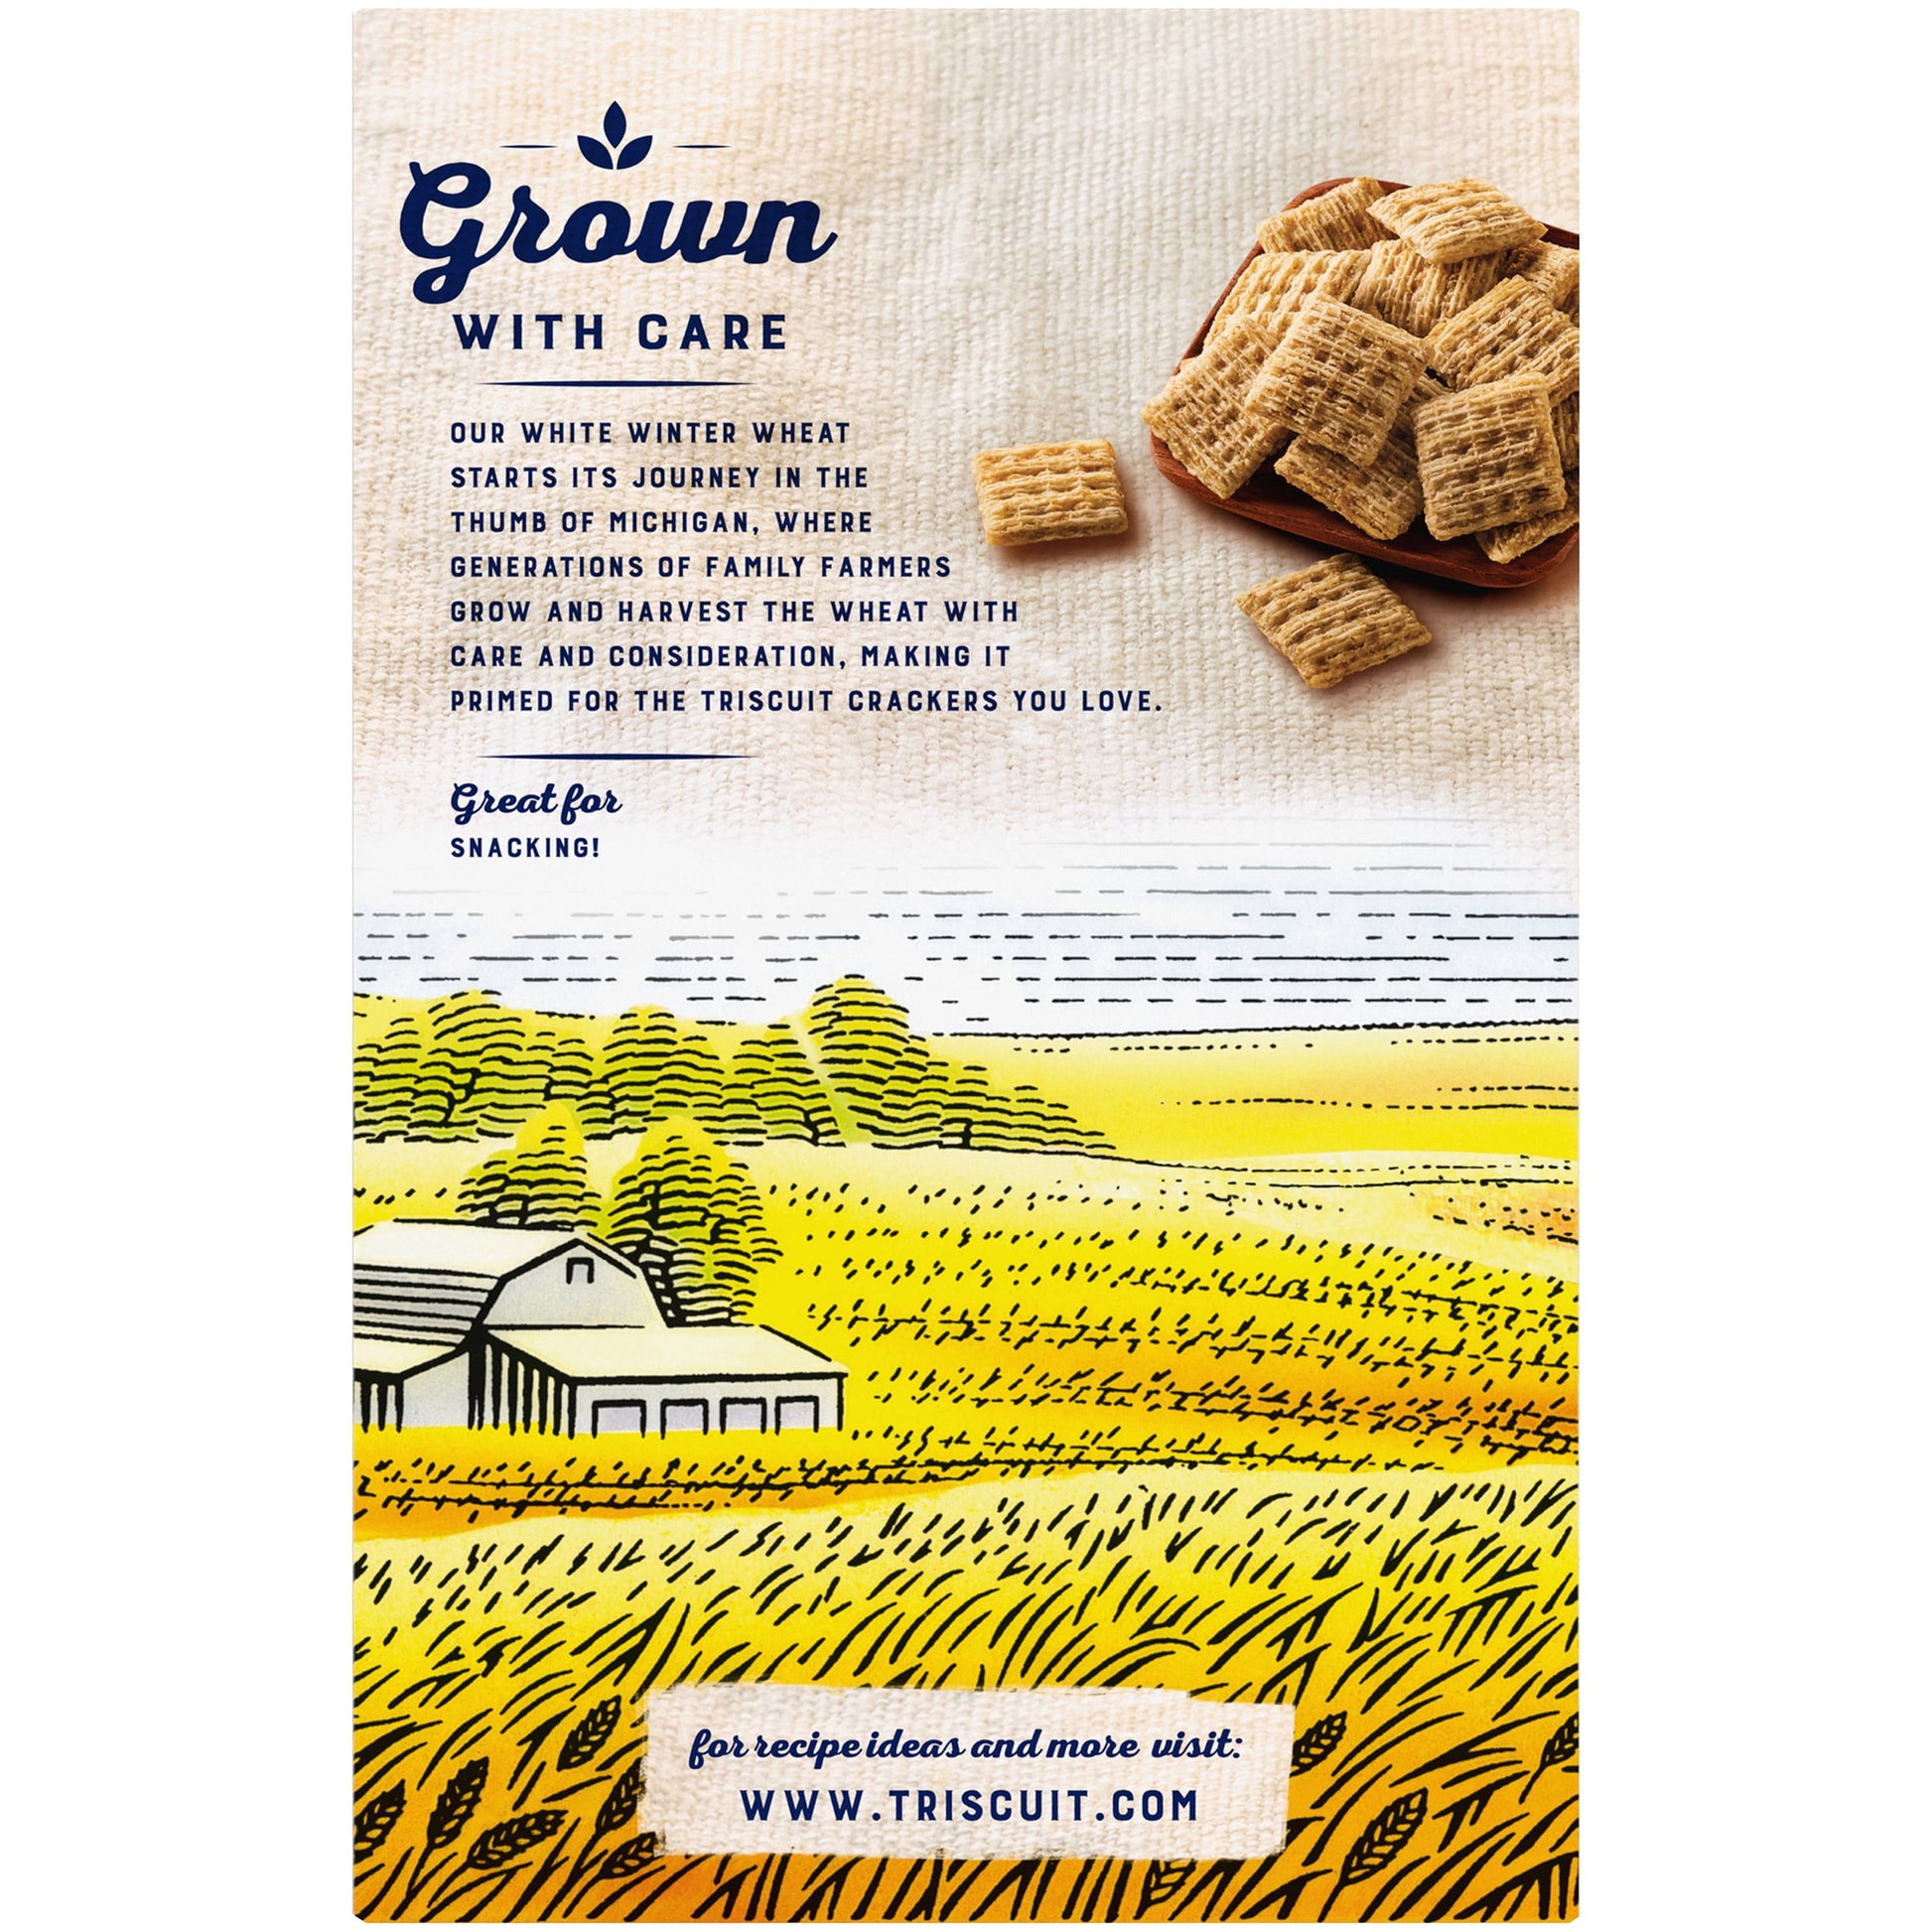 (3 Pack)  Minis Original Whole Grain Wheat Crackers, Vegan Crackers, 8 Oz